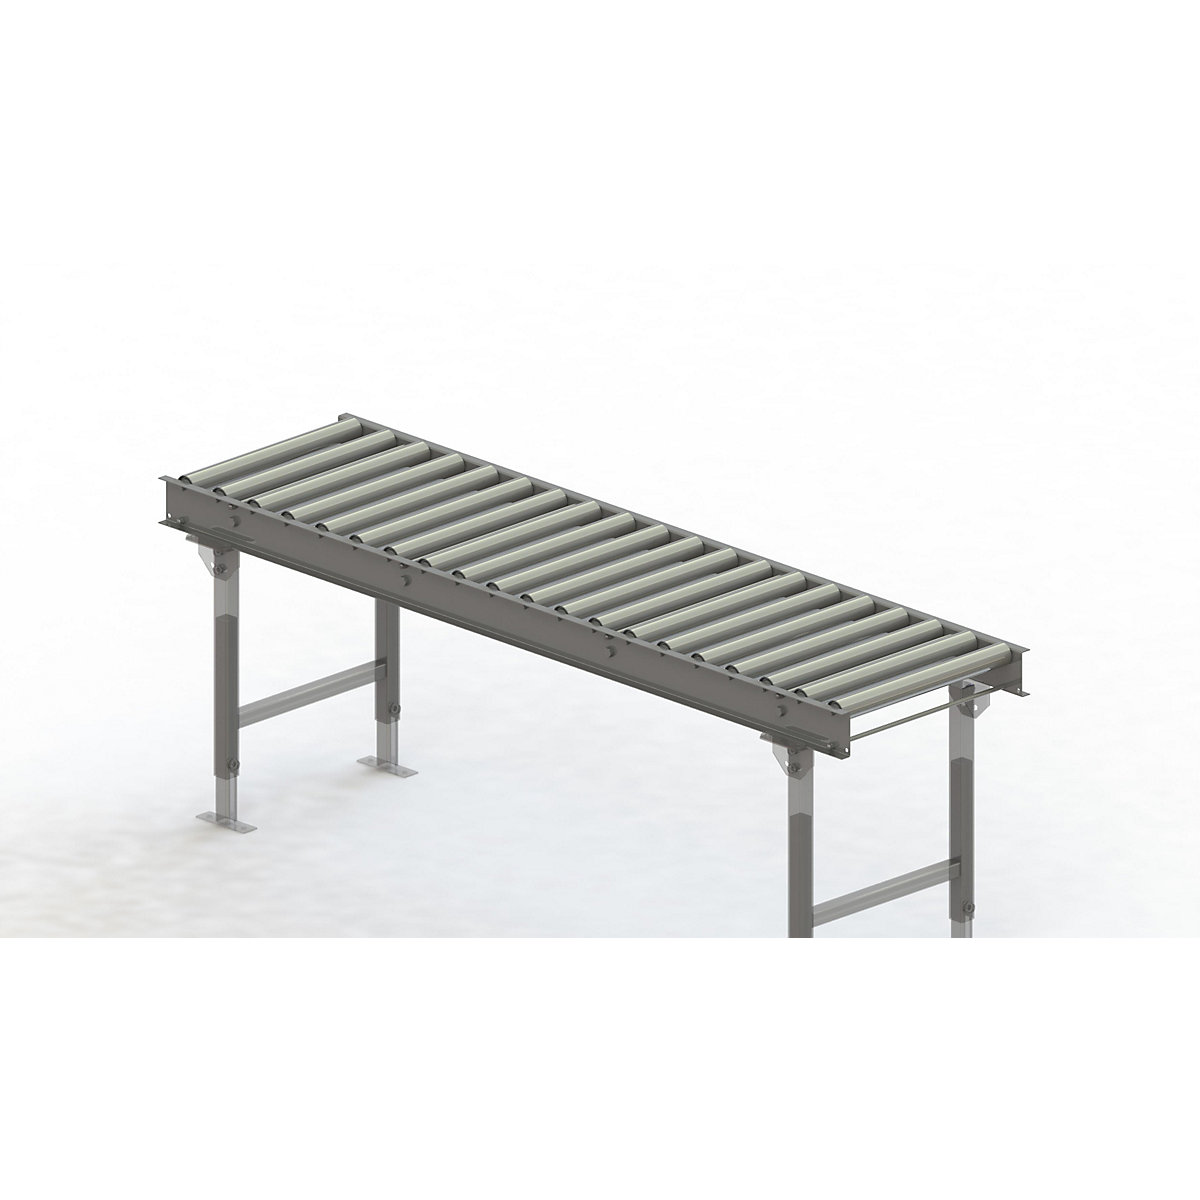 Gura – Roller conveyor, steel frame with zinc plated steel rollers, track width 500 mm, distance between axles 100 mm, length 2 m